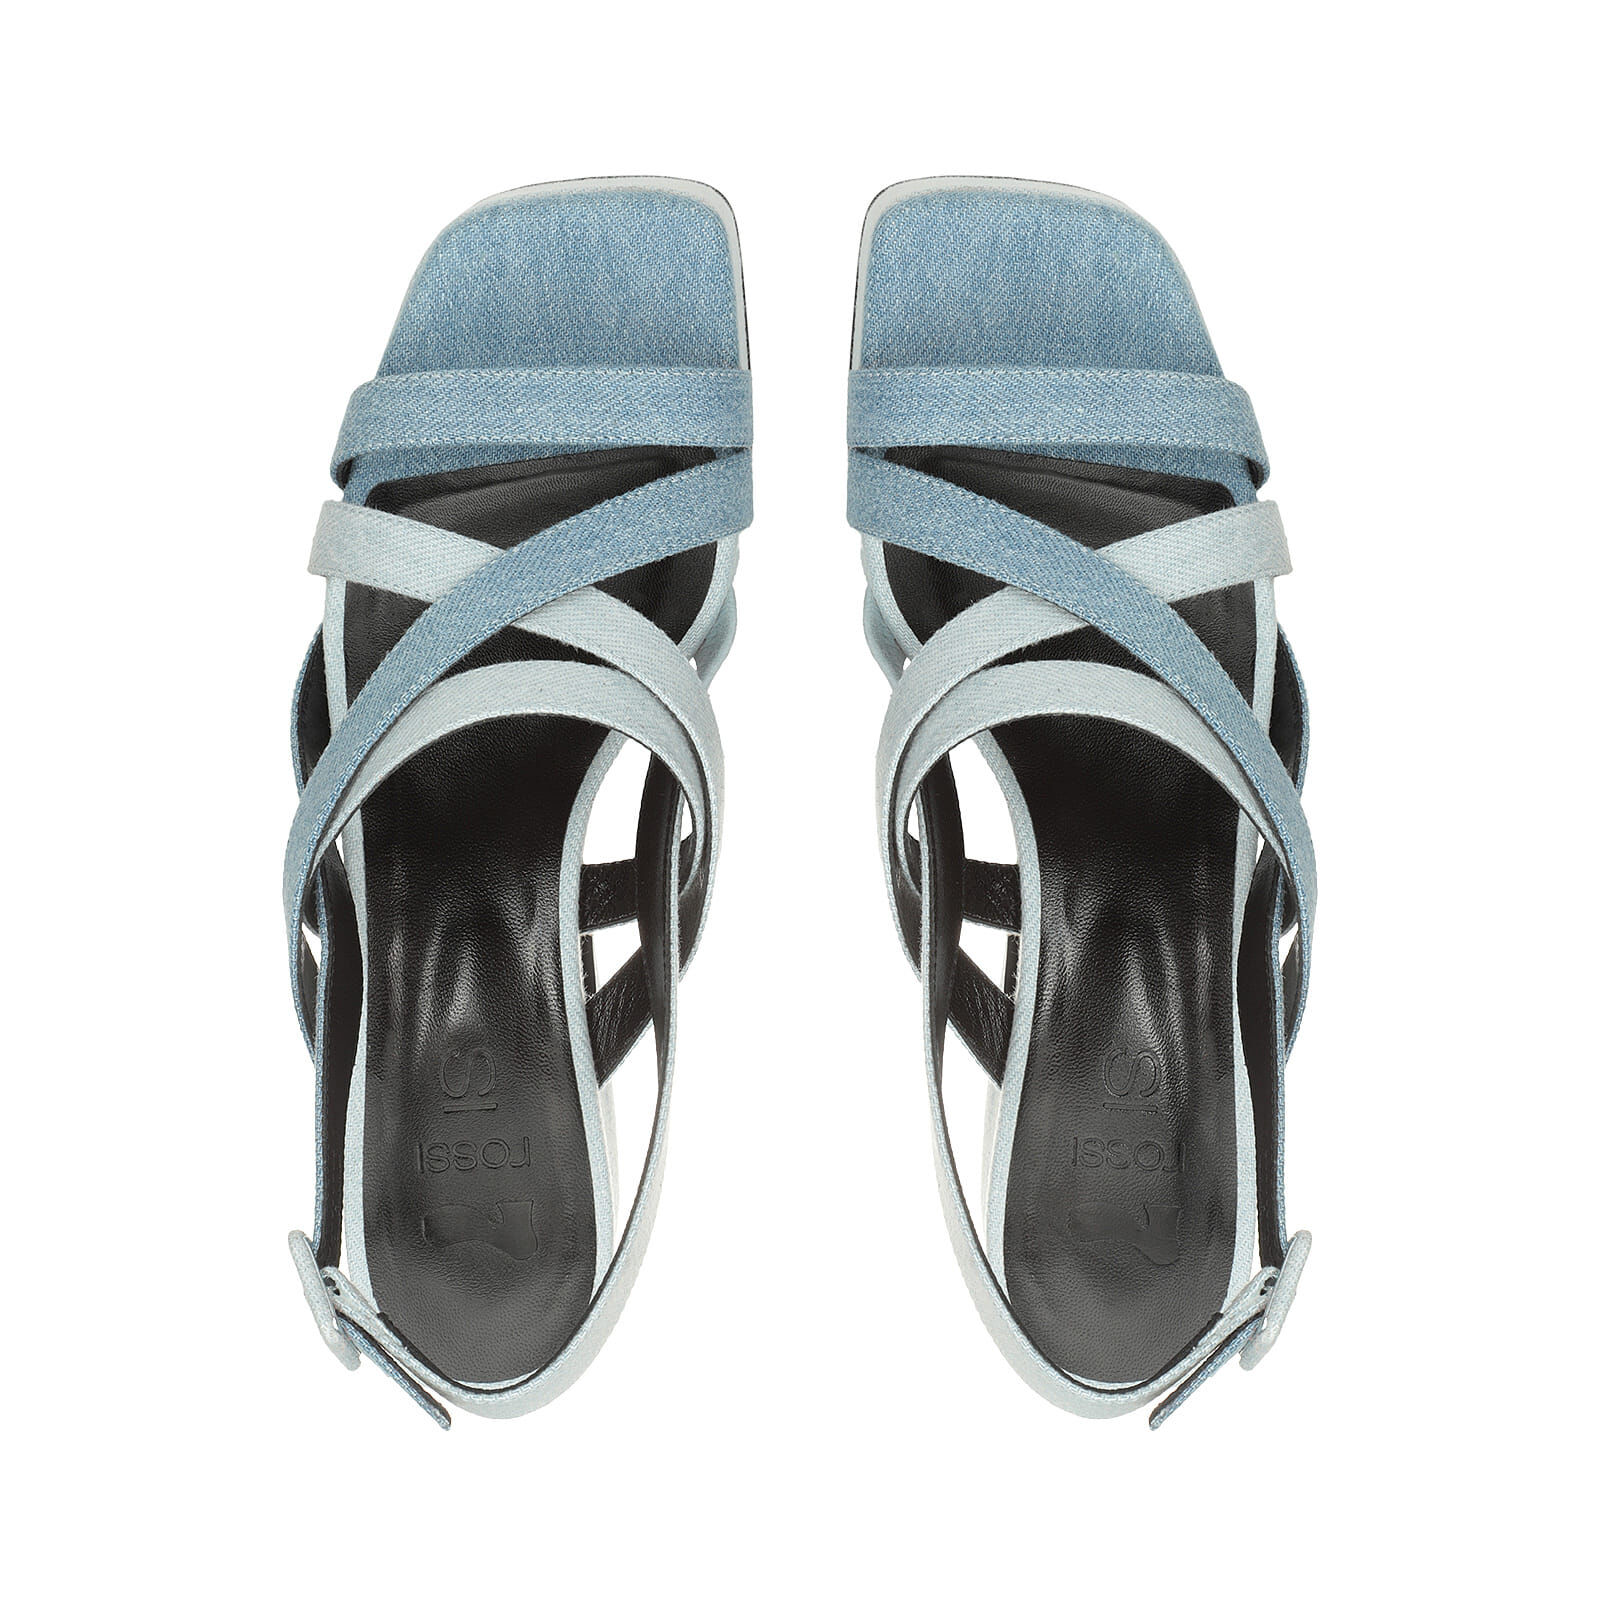 SI ROSSI - Sandals Blue, 3